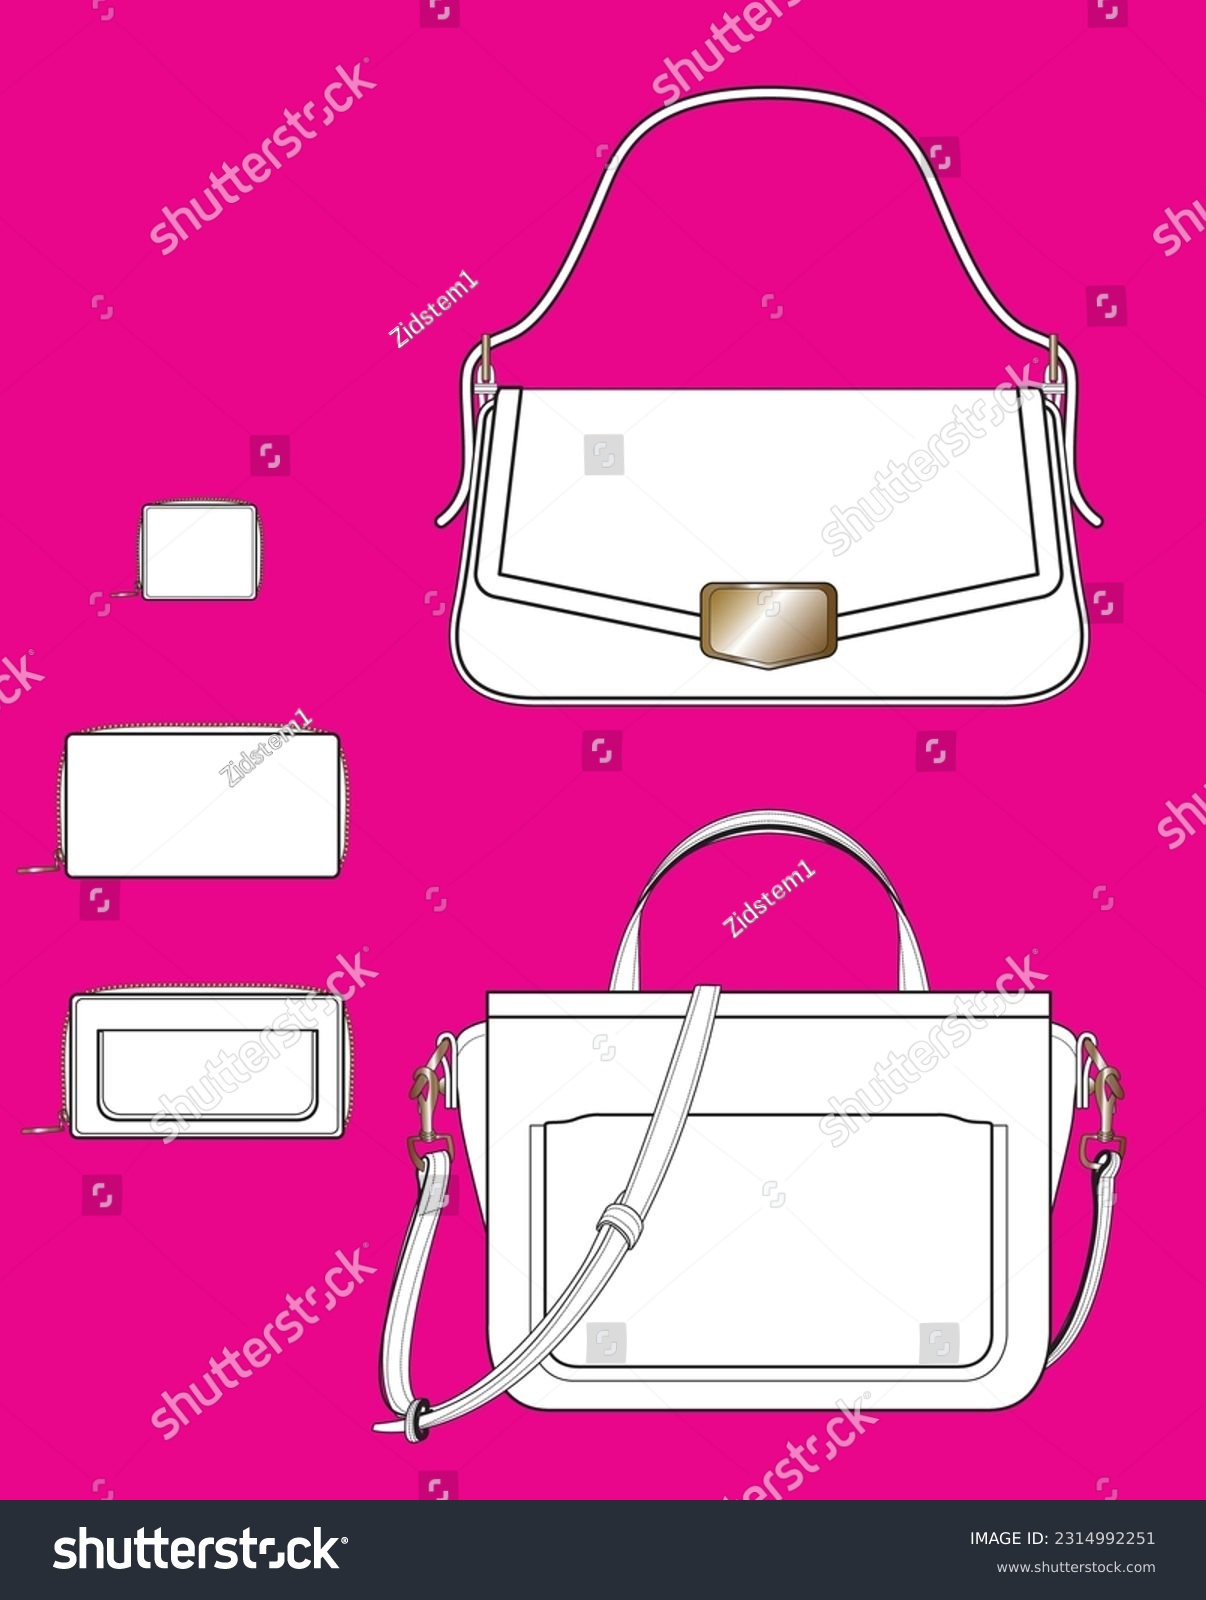 SVG of handbags wallet puller vector art design illustration for designer, garment svg